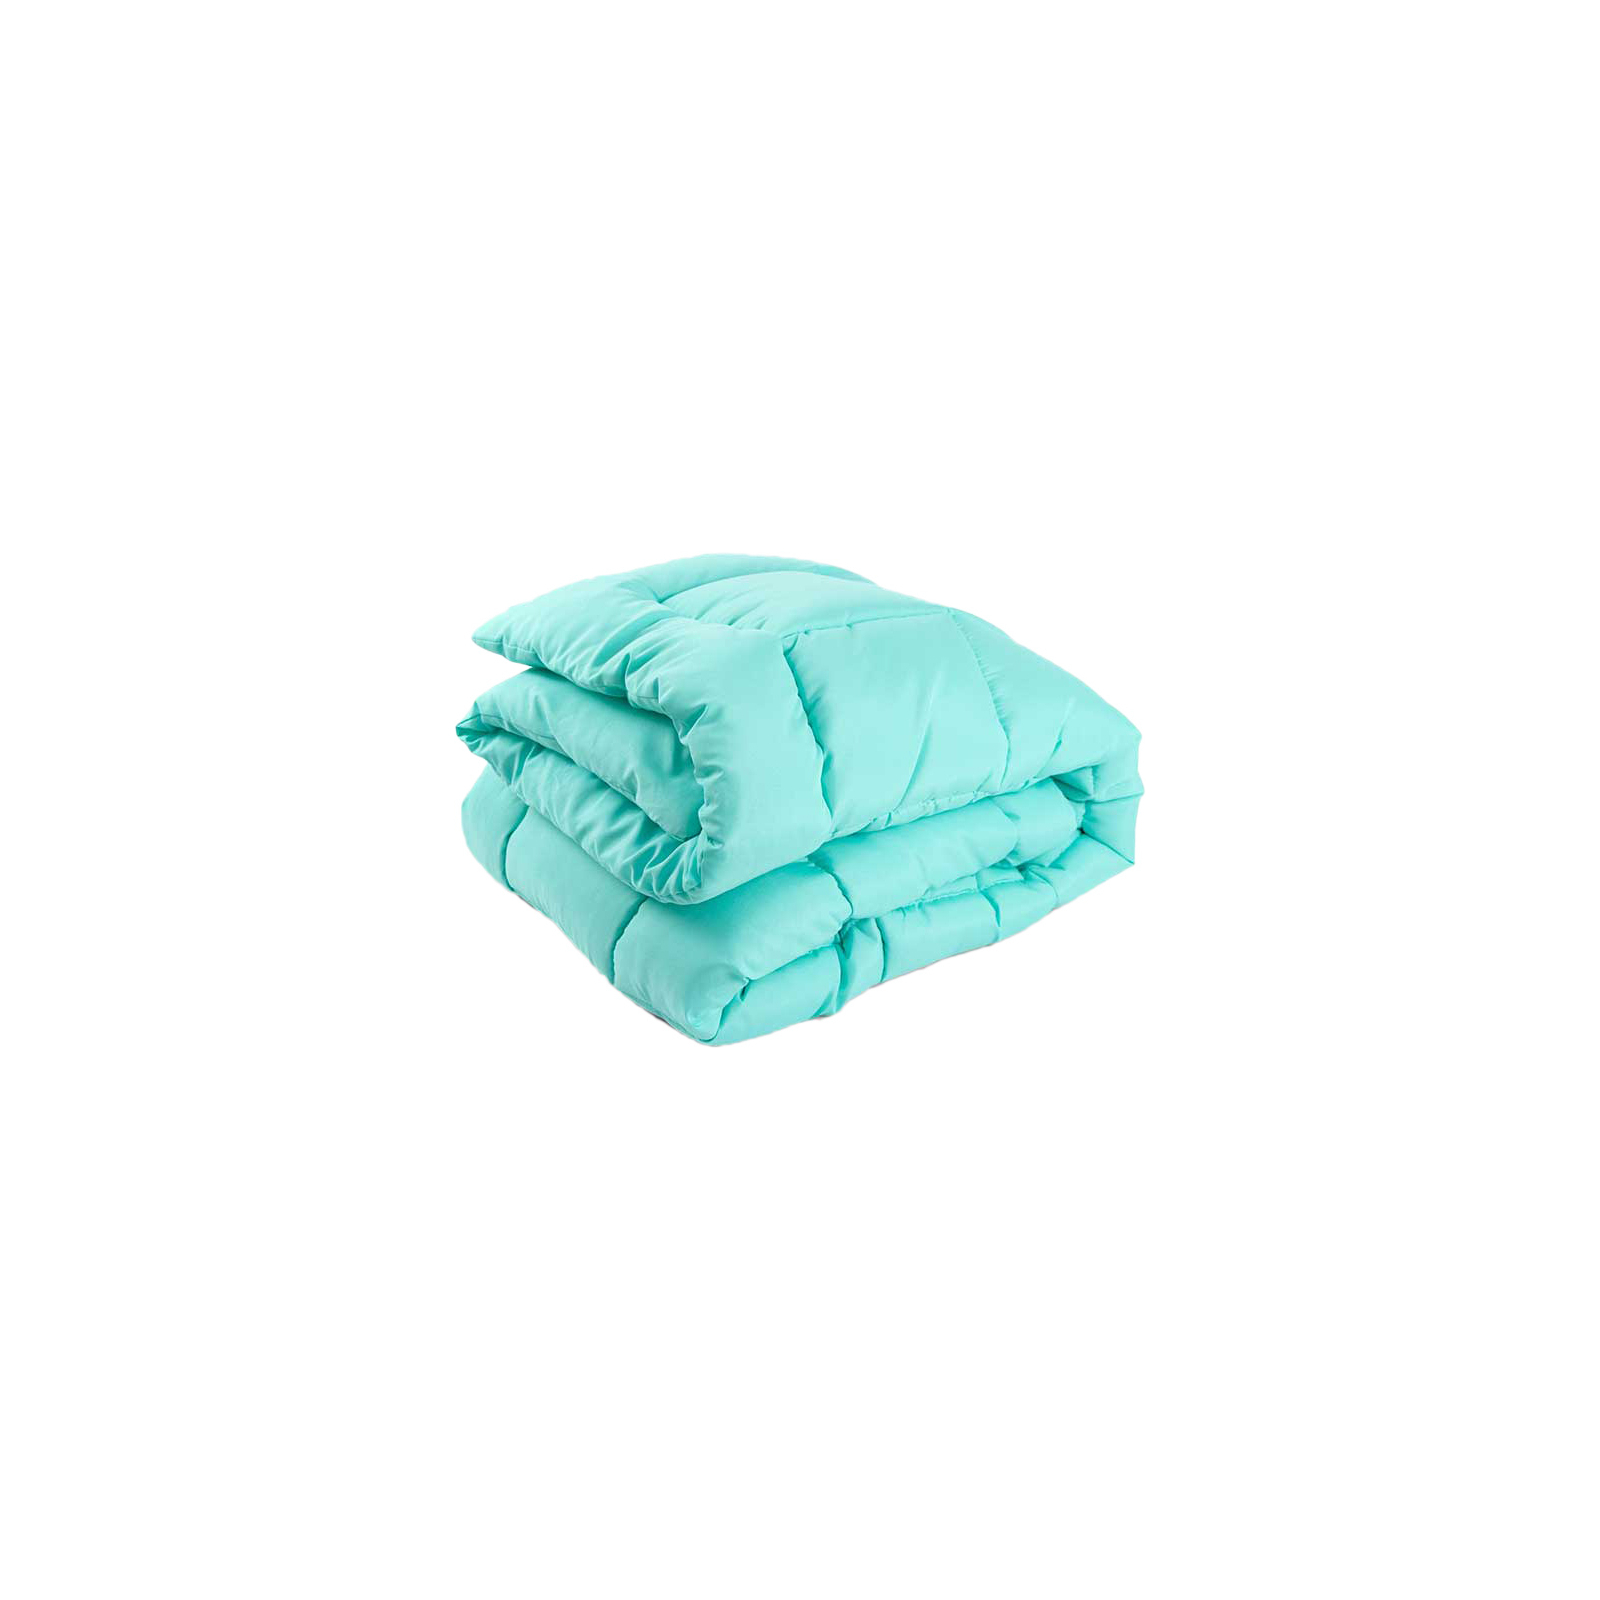 Одеяло Руно силиконовое Mint зима 200х220 (322.52_Mint)